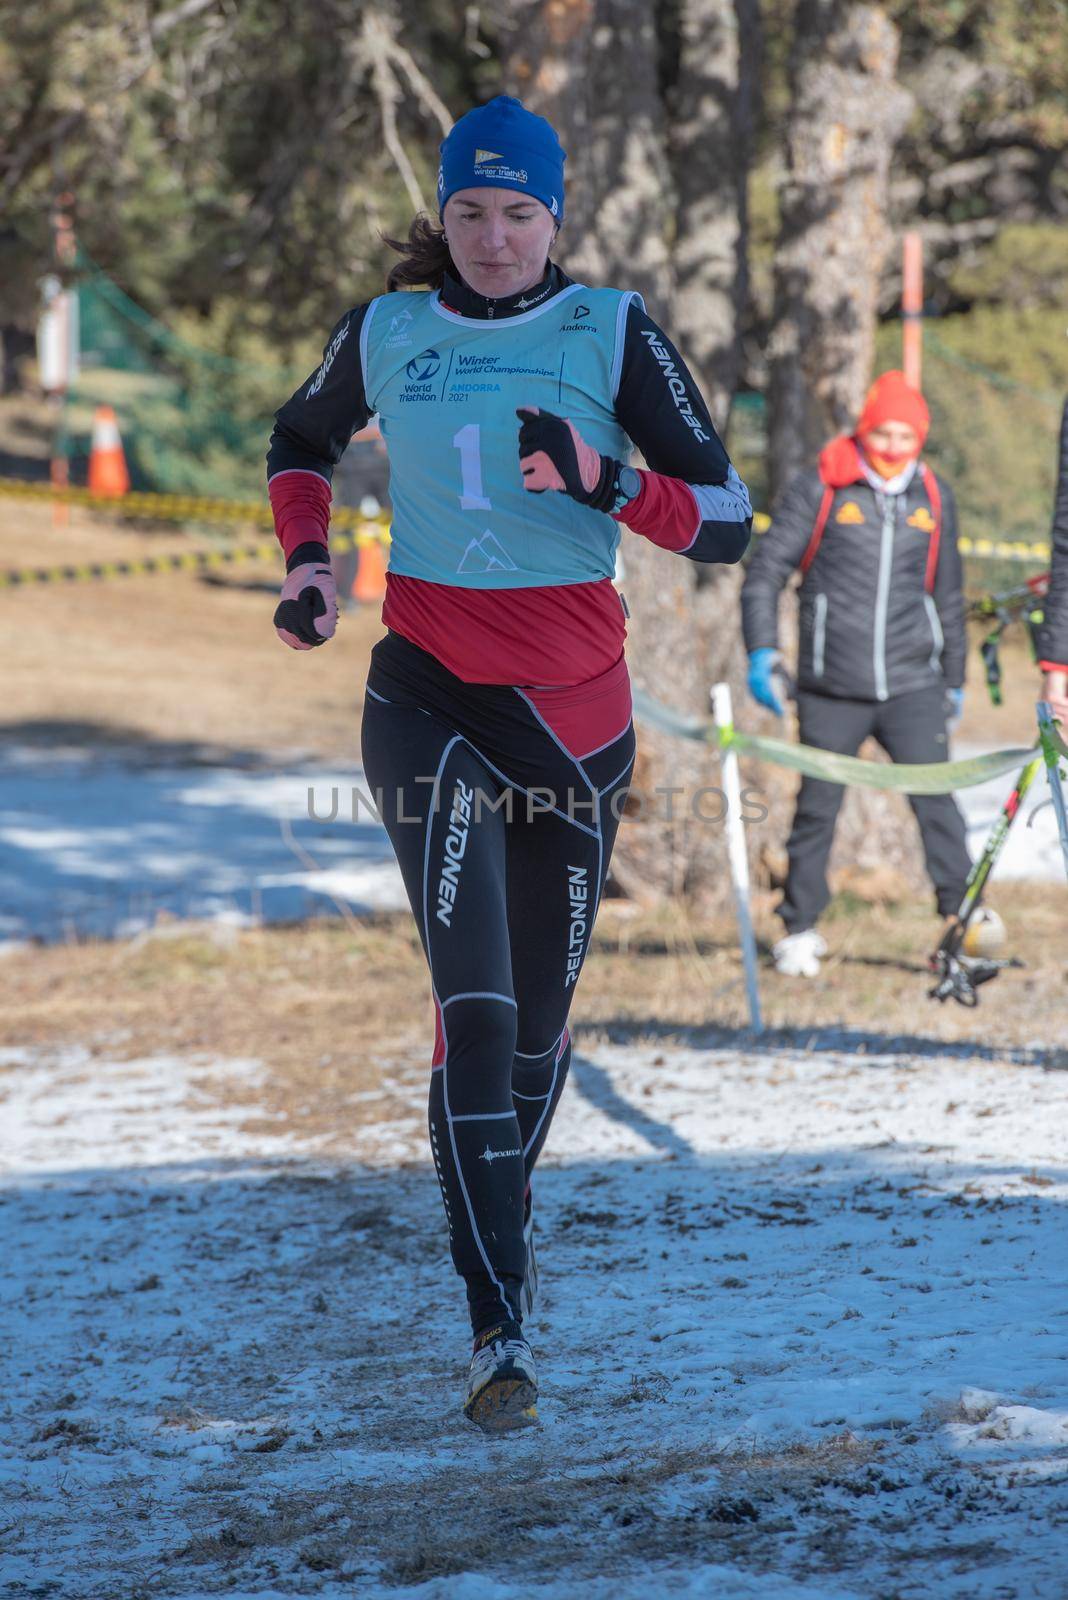 YuliaSurikova RUS in the 2021 World Triathlon Winter Championships Andorra by martinscphoto